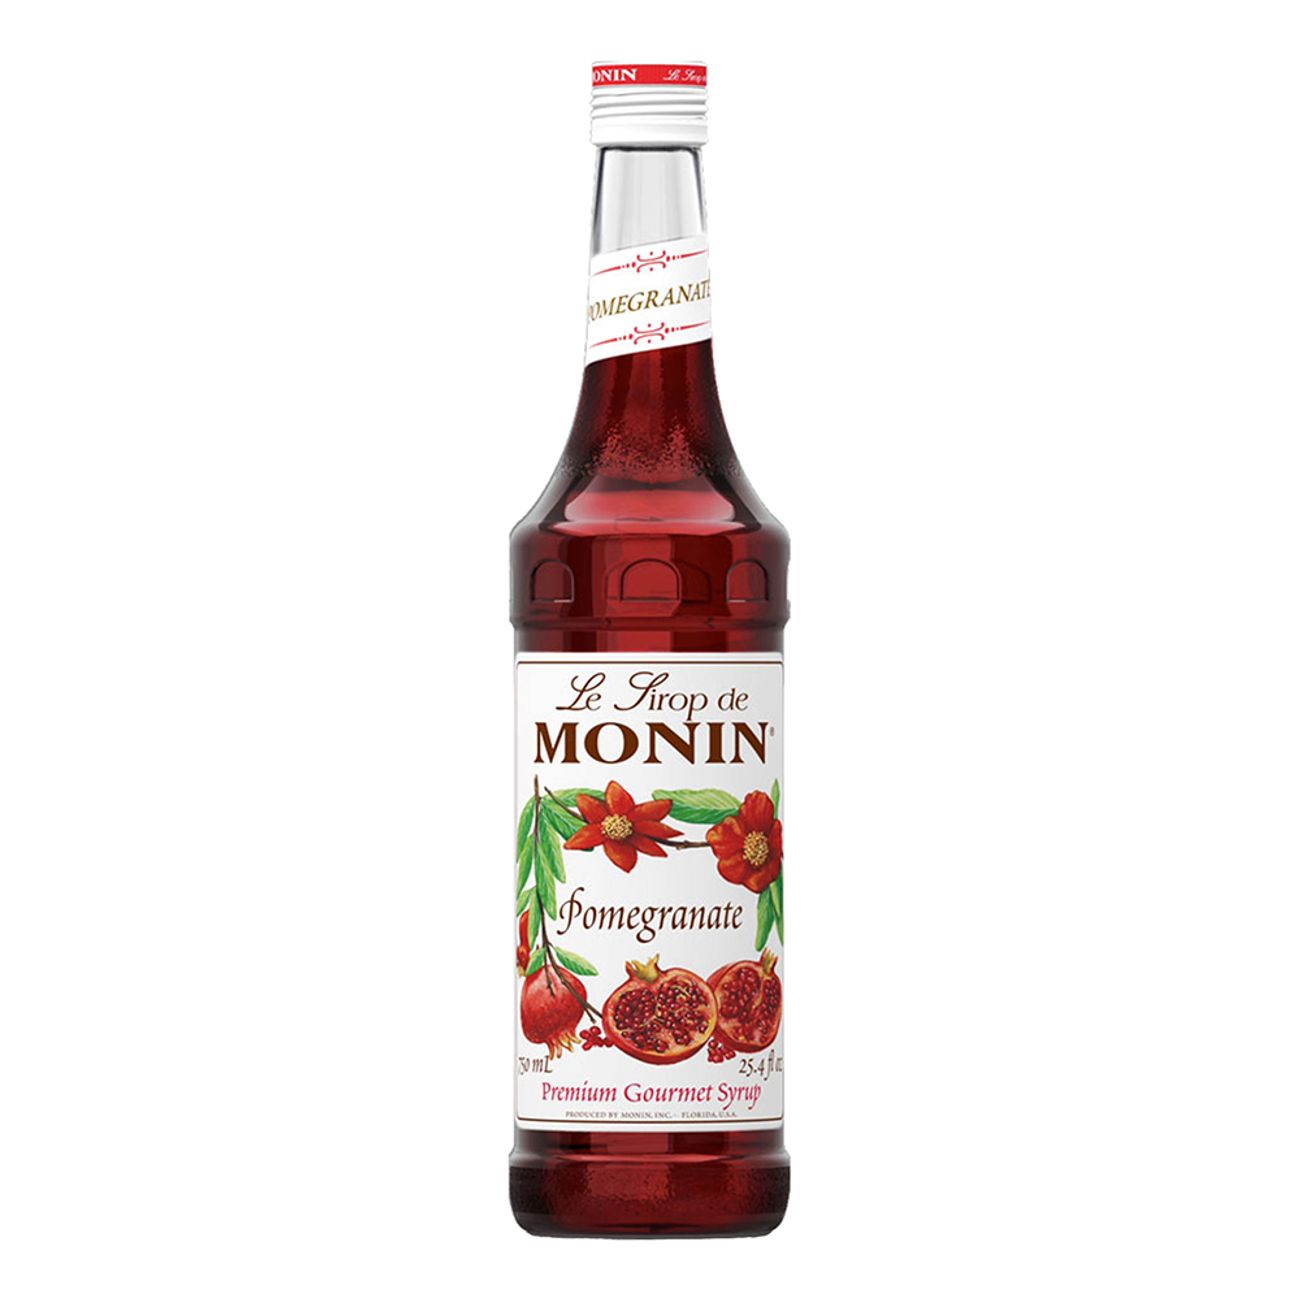 monin-granatapple-drinkmix--1